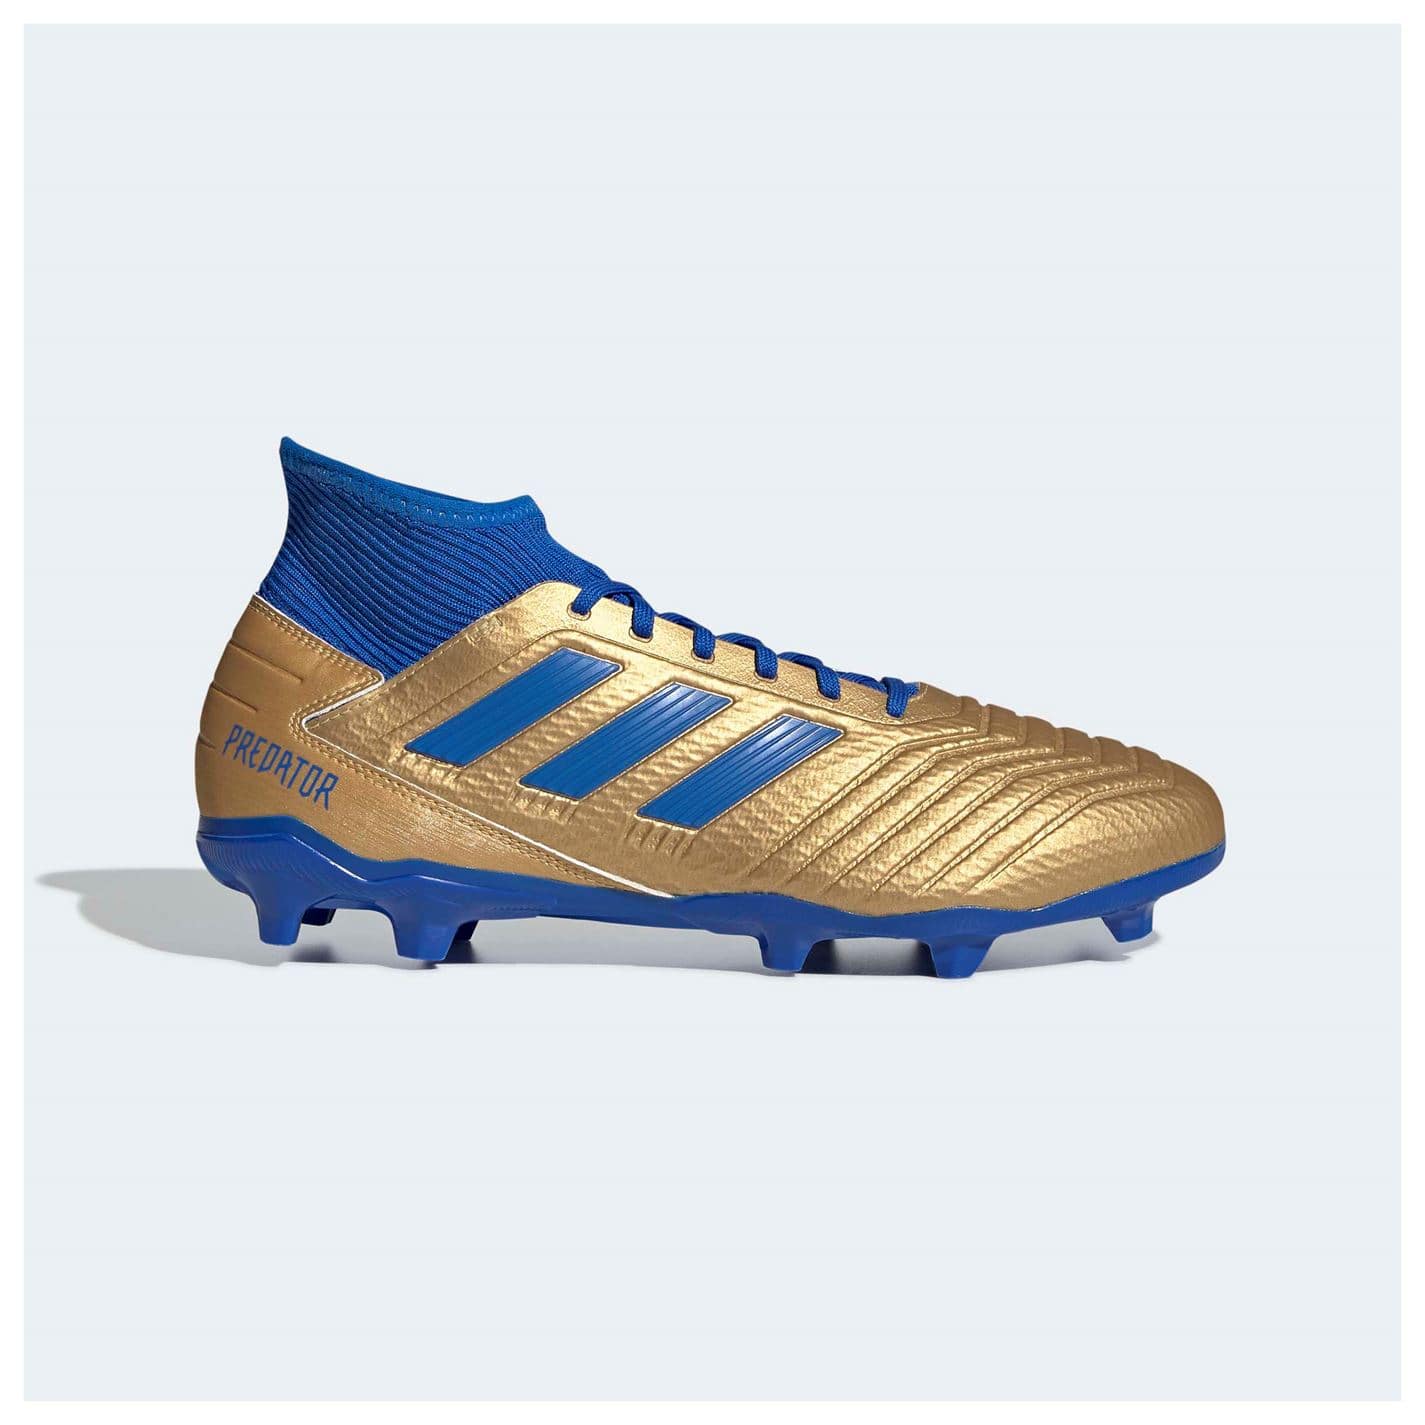 Adidas Predator 19.3 Mens FG Football Boots